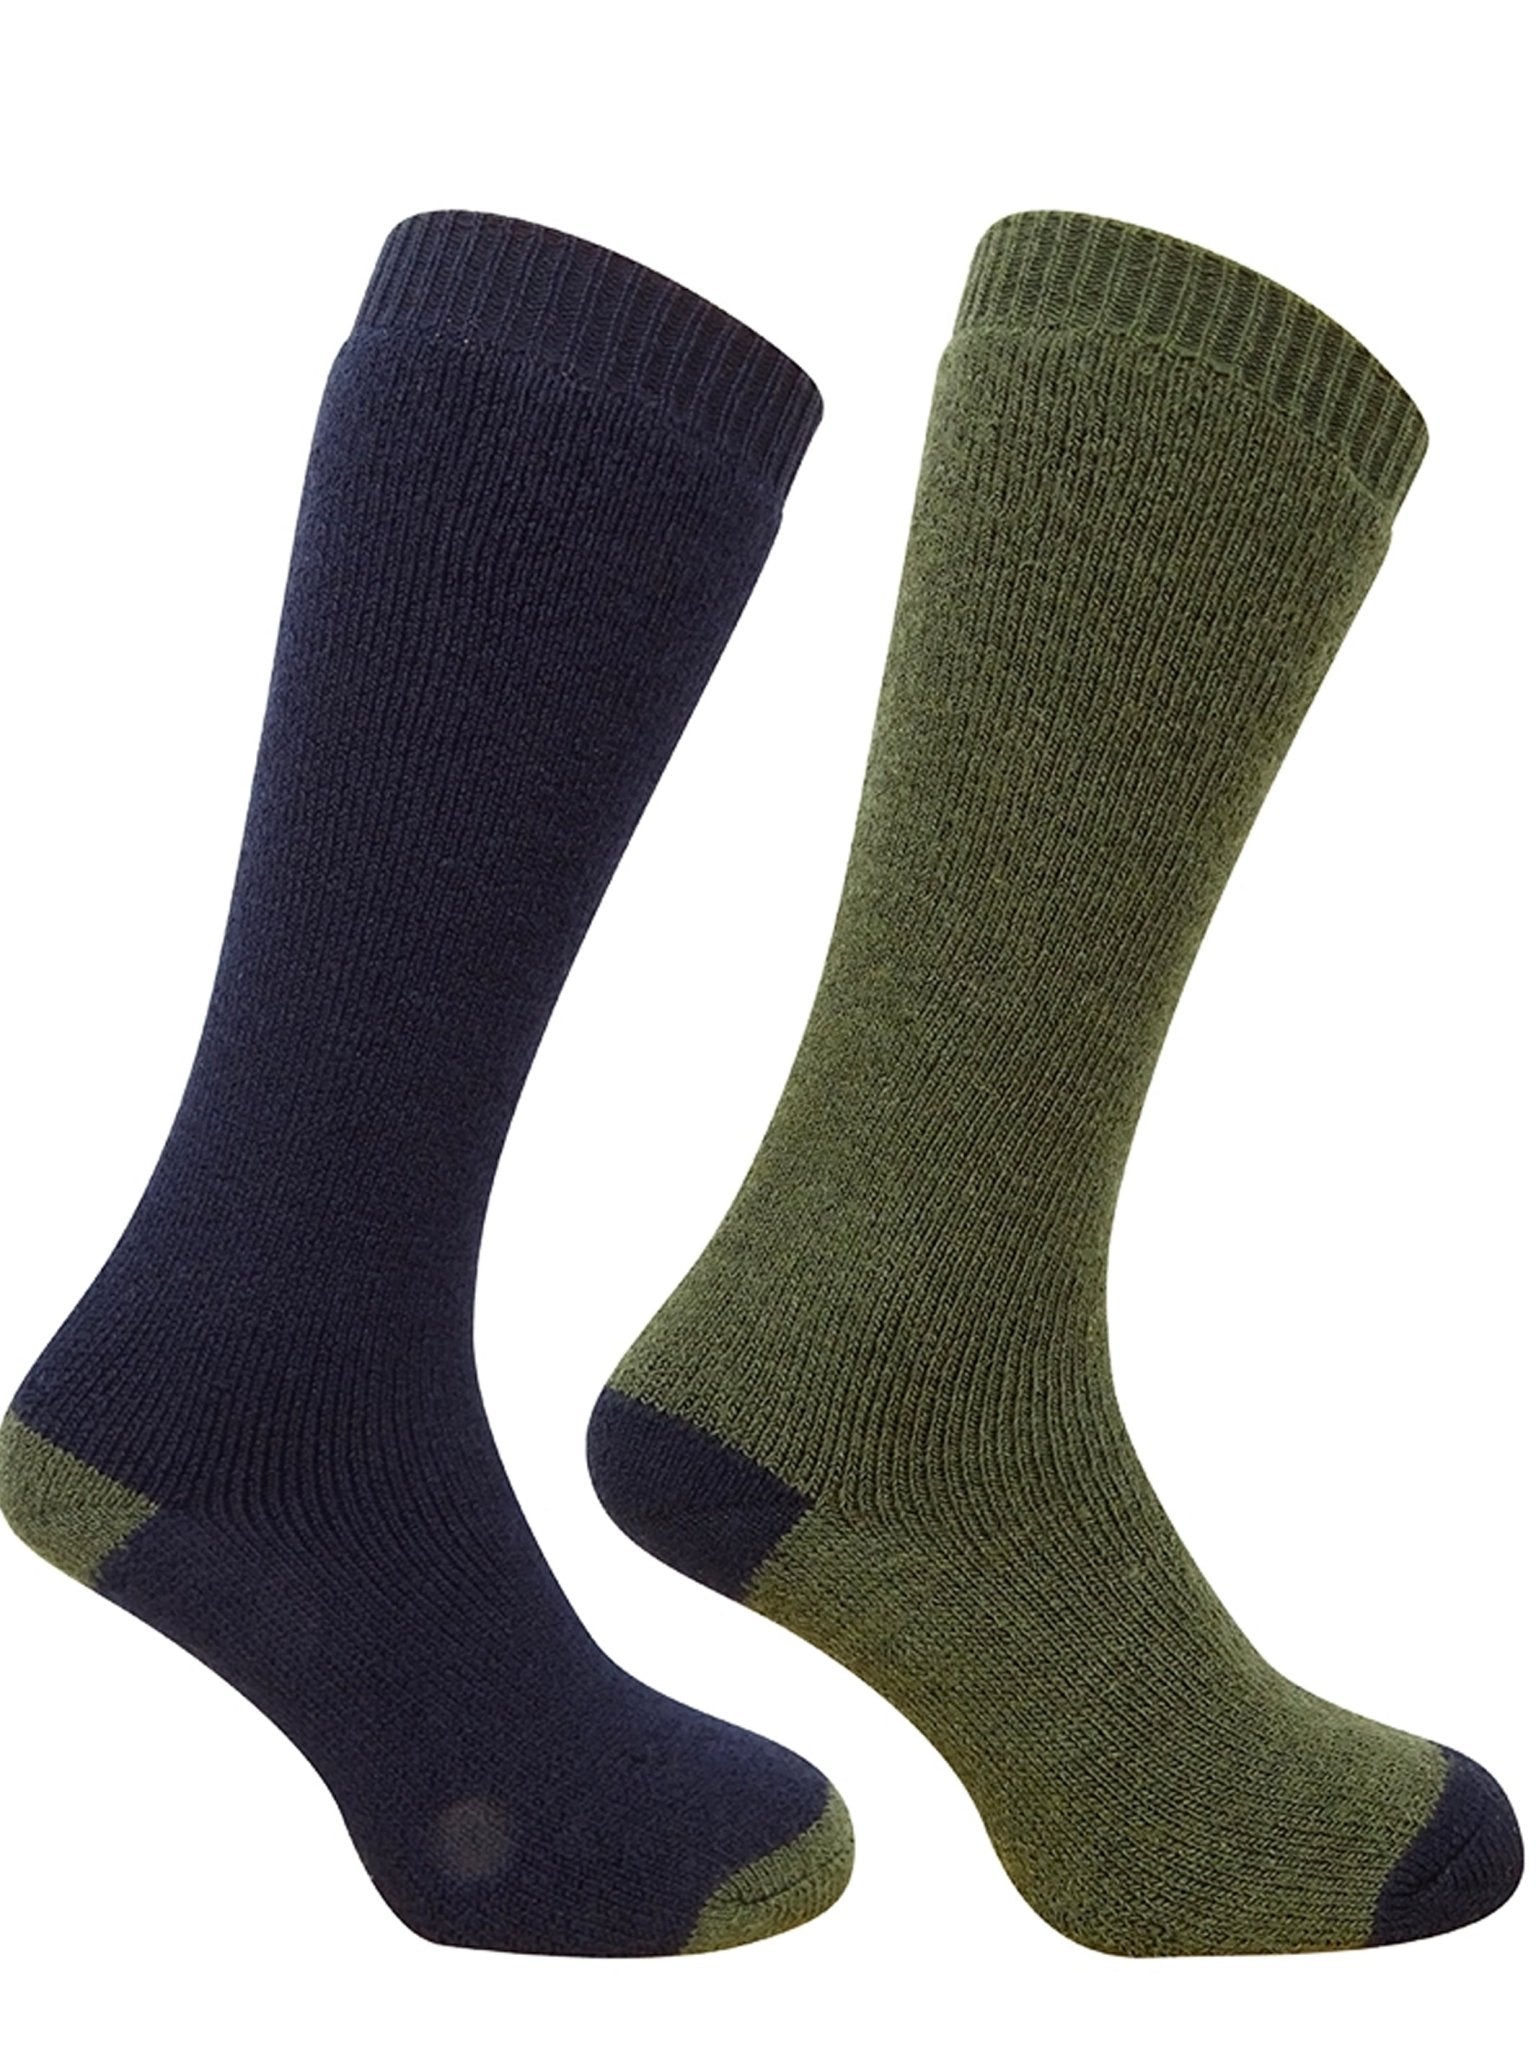 Hoggs of Fife Hoggs of Fife - 1903 Long Country Socks - outdoor merino wool Socks (Twin Pack Mens sock) Socks